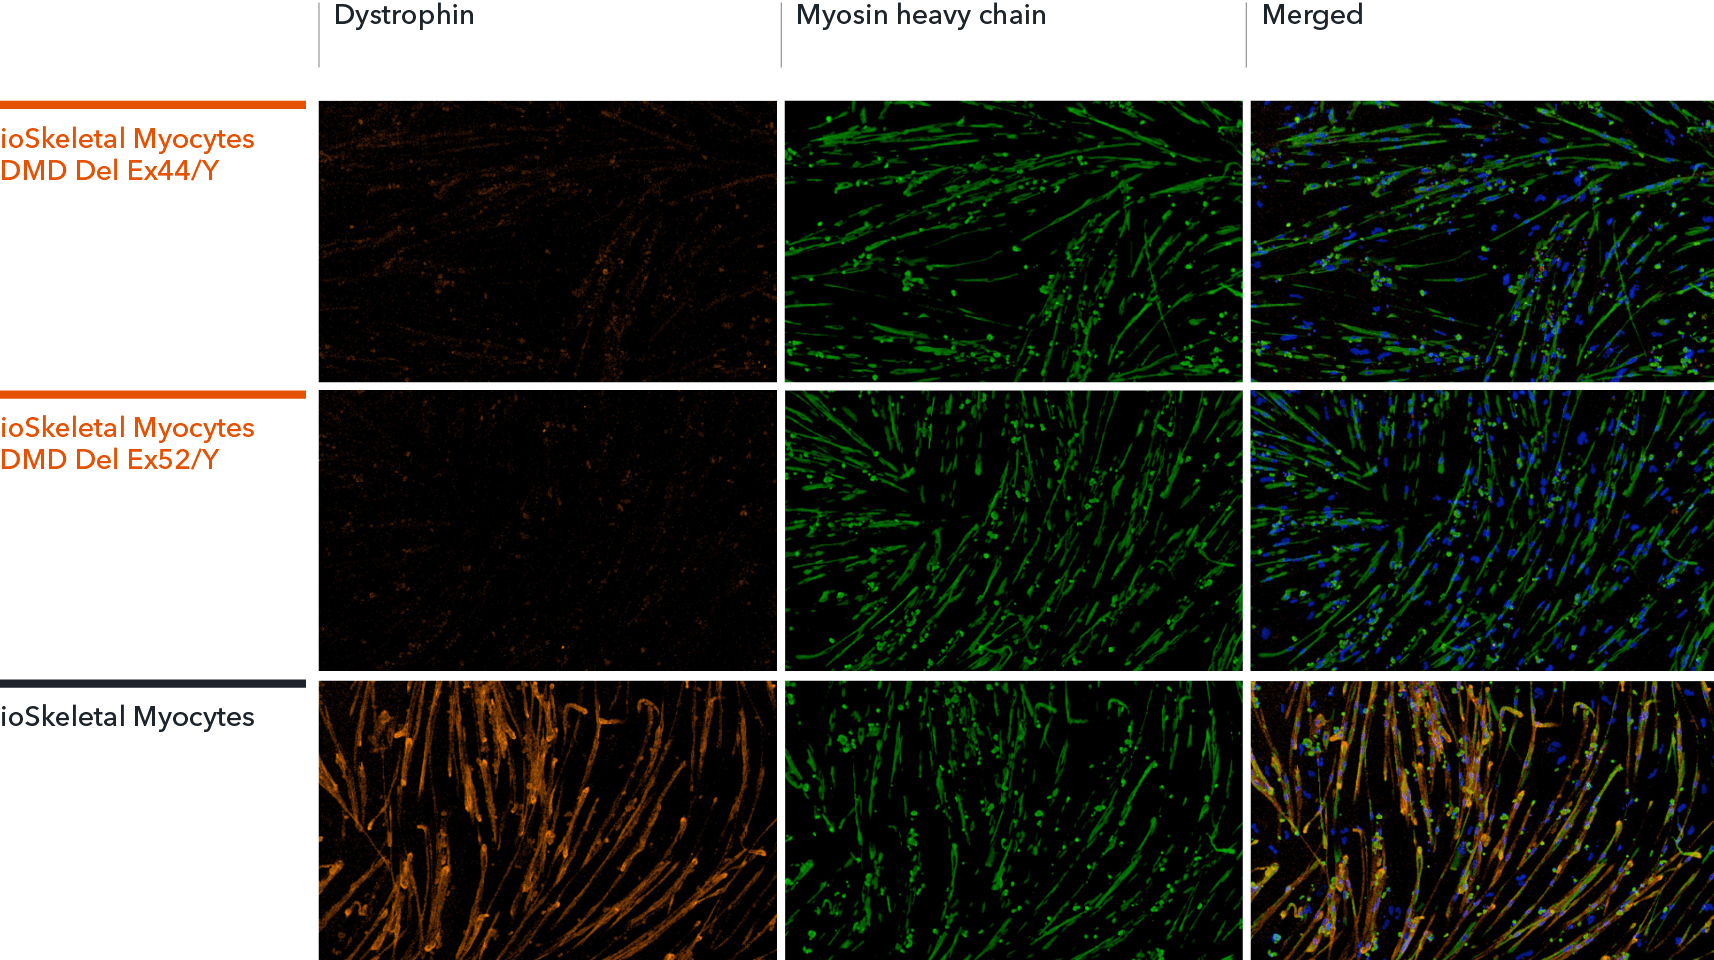  ioSkeletal Myocytes DMD Exon Deletion disease model cells immunocytochemistry shows absence of Dystrophin protein